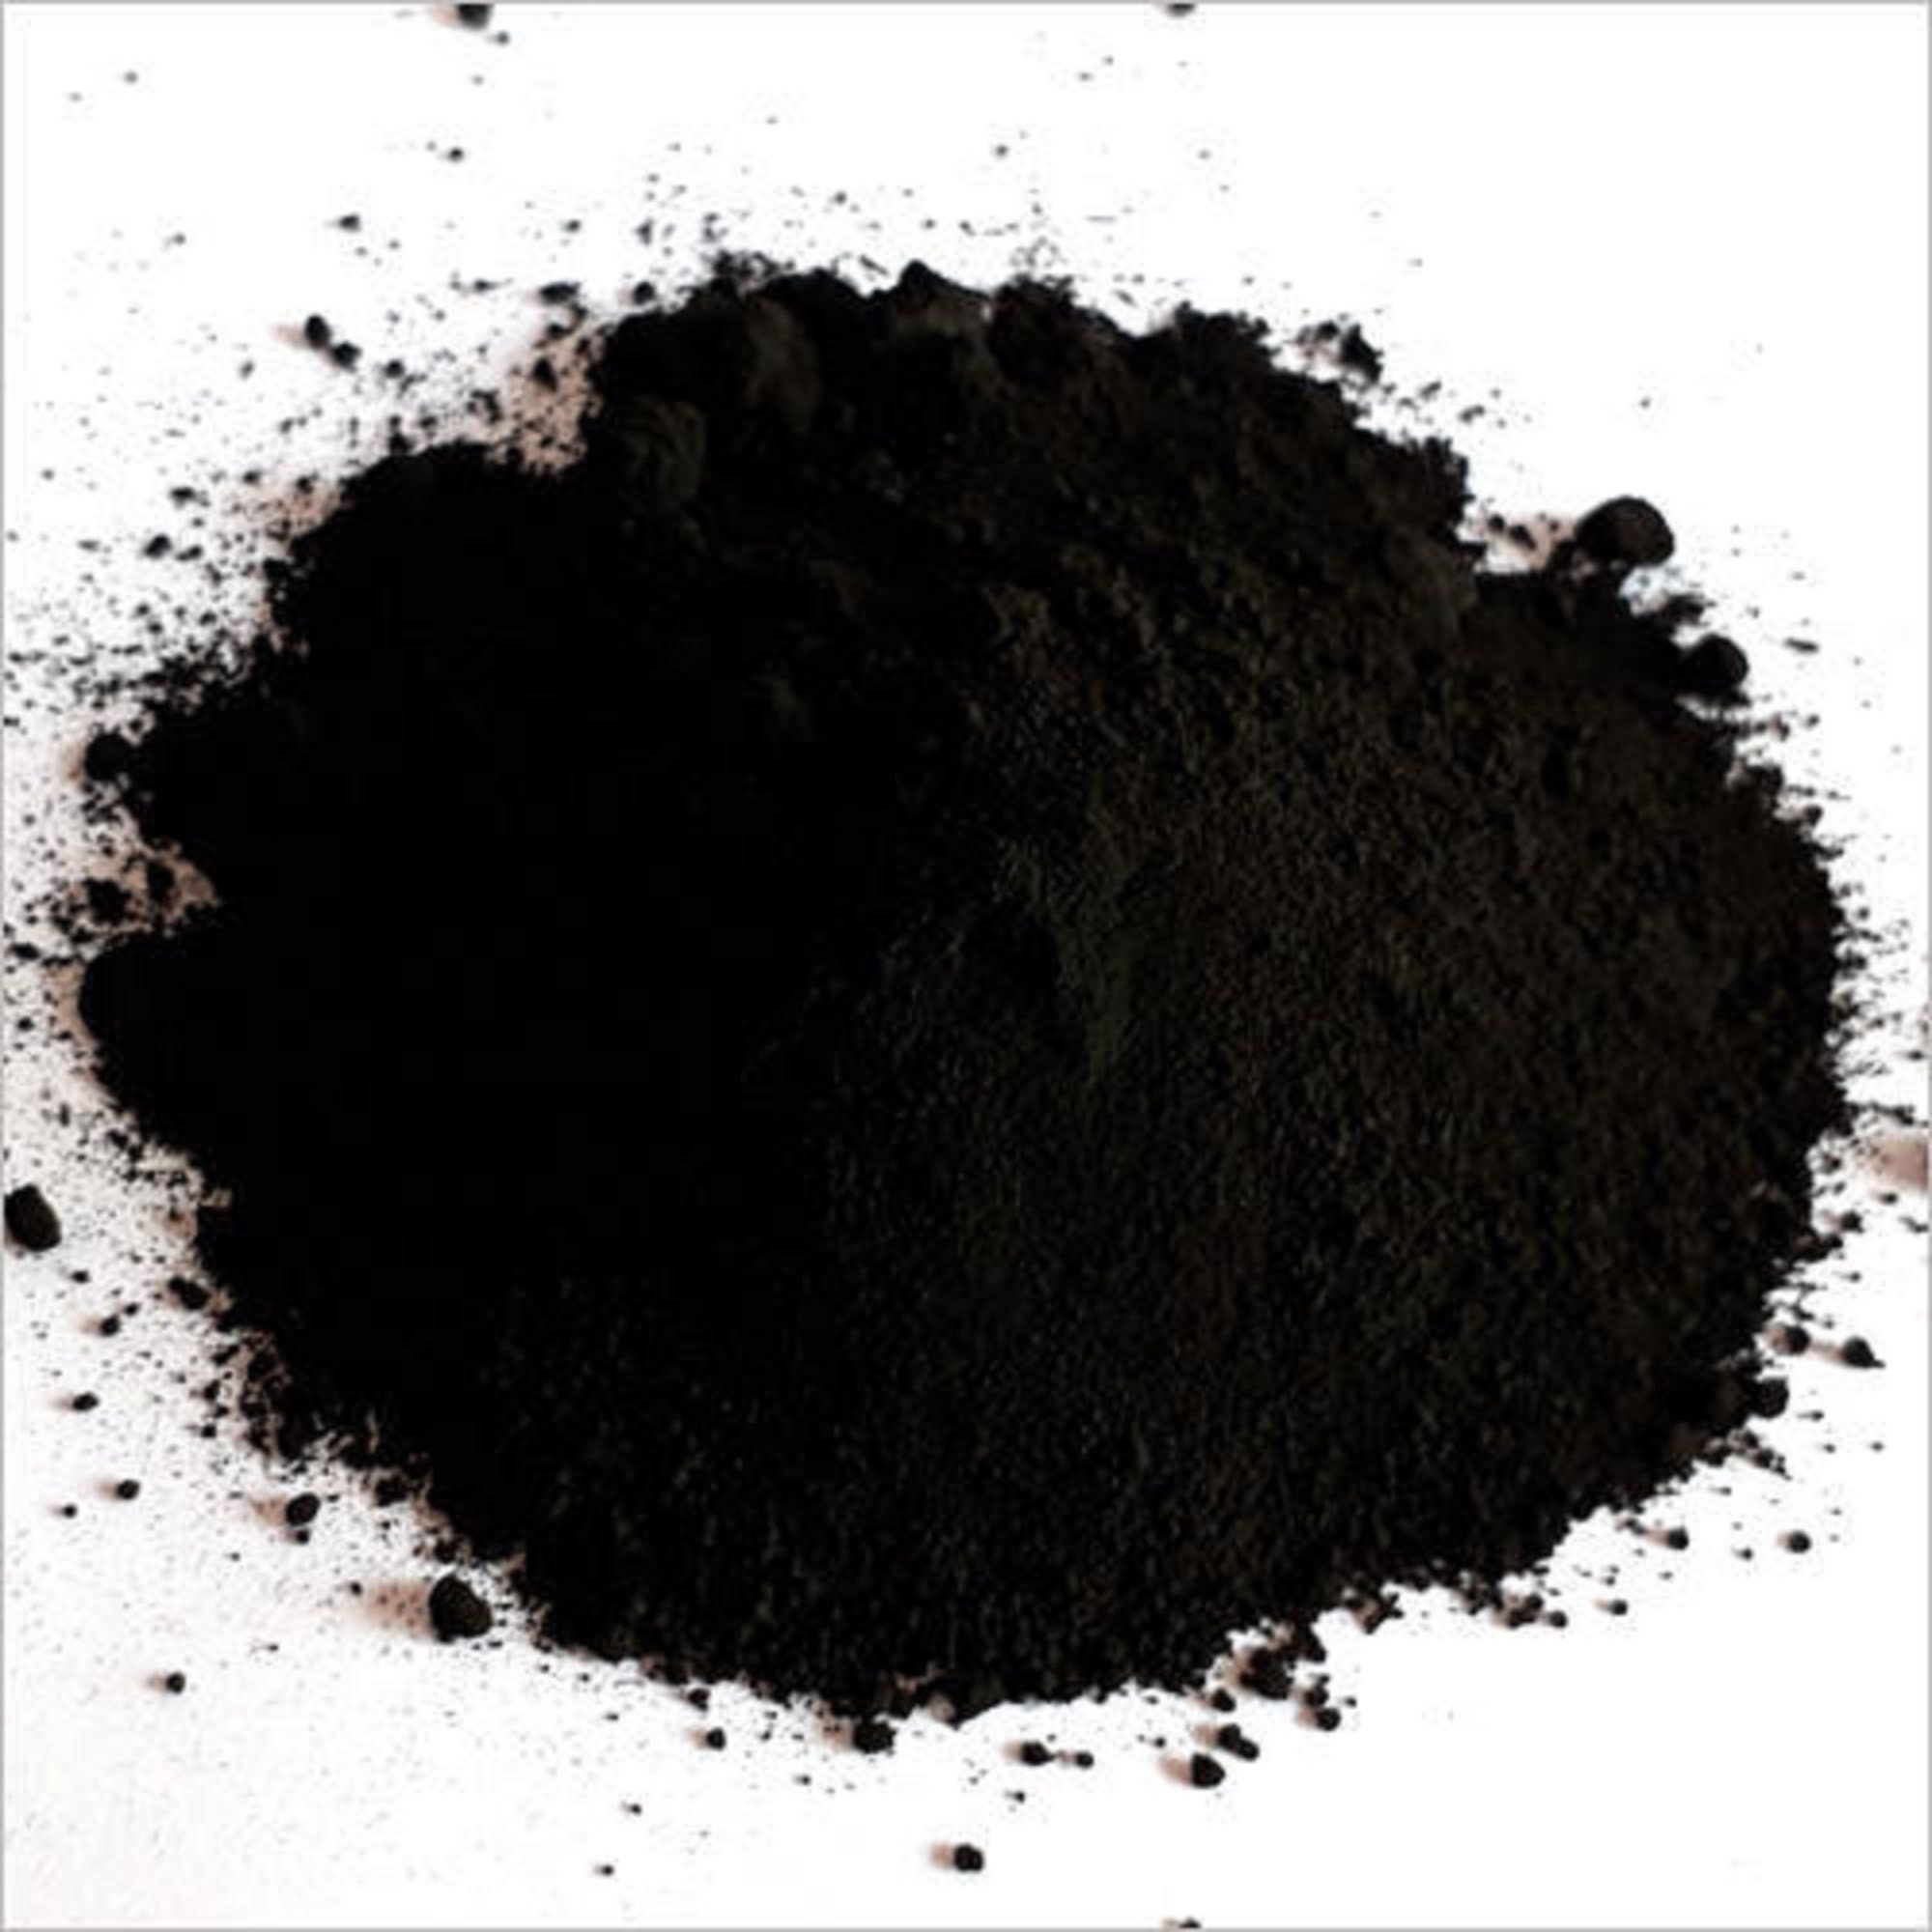 Powder Pigment - Metallic Charcoal Black